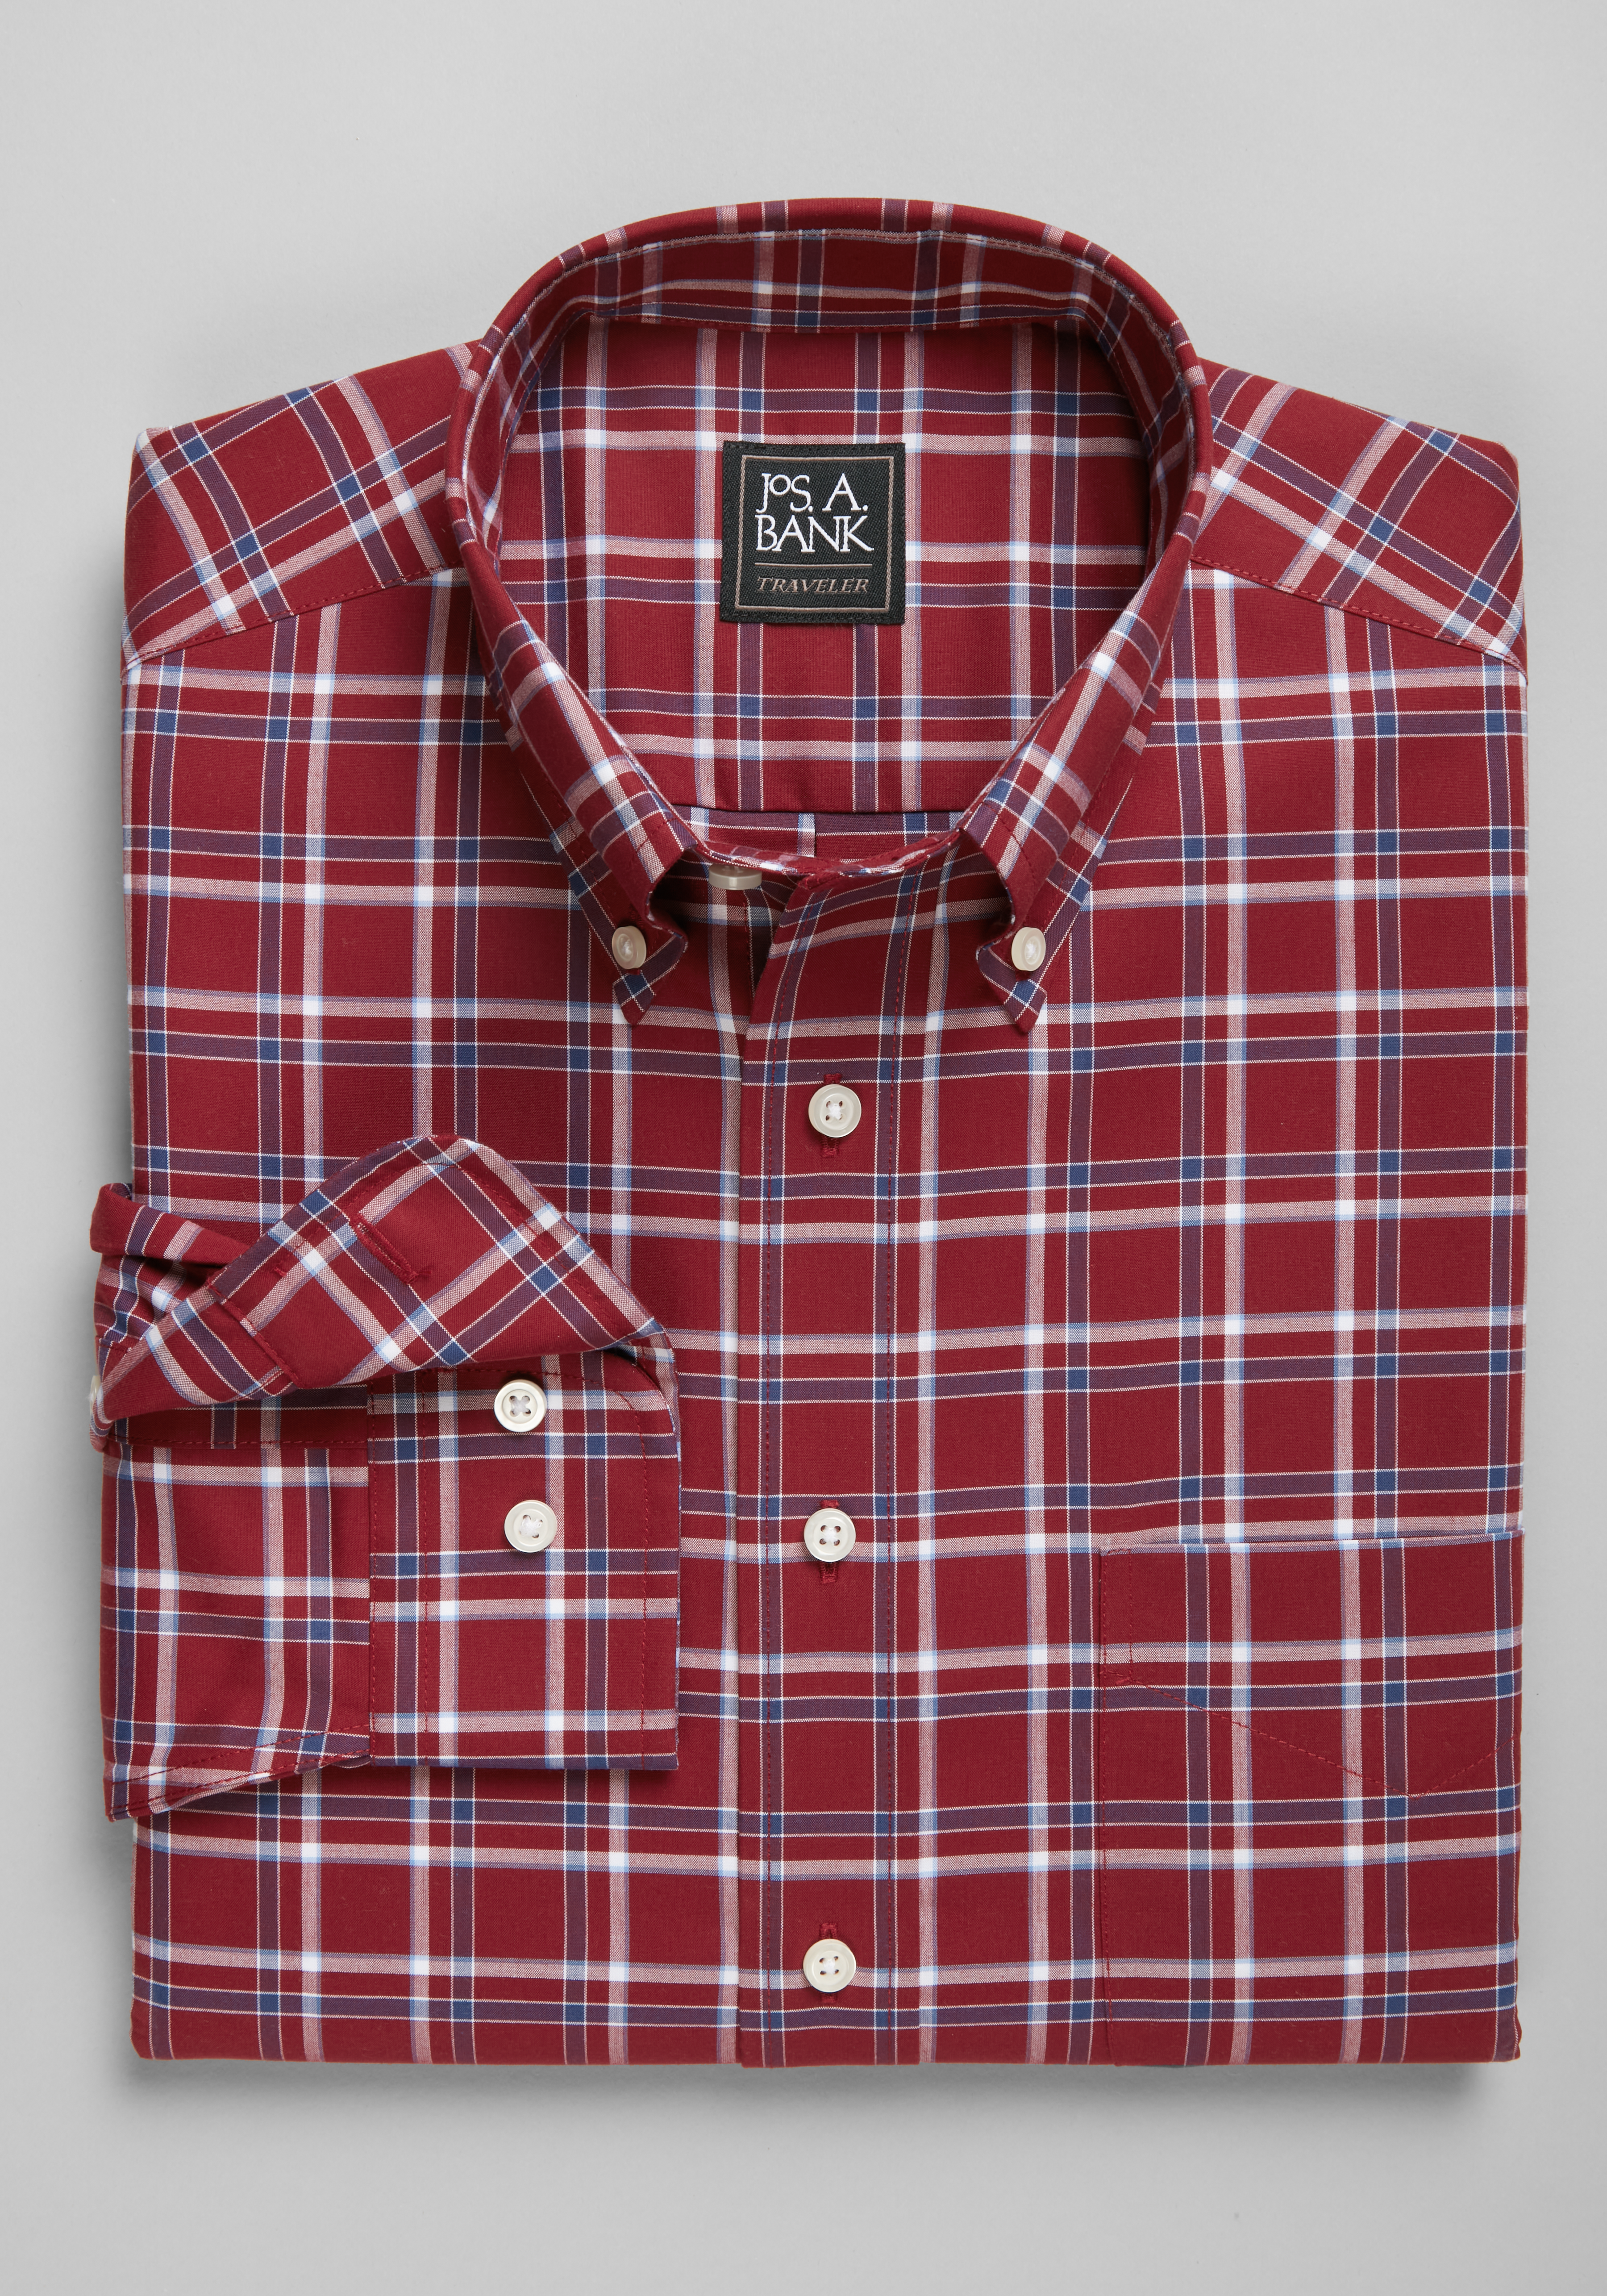 Sportshirts - Long Sleeve, Button Shirts | Men's Linen | A.